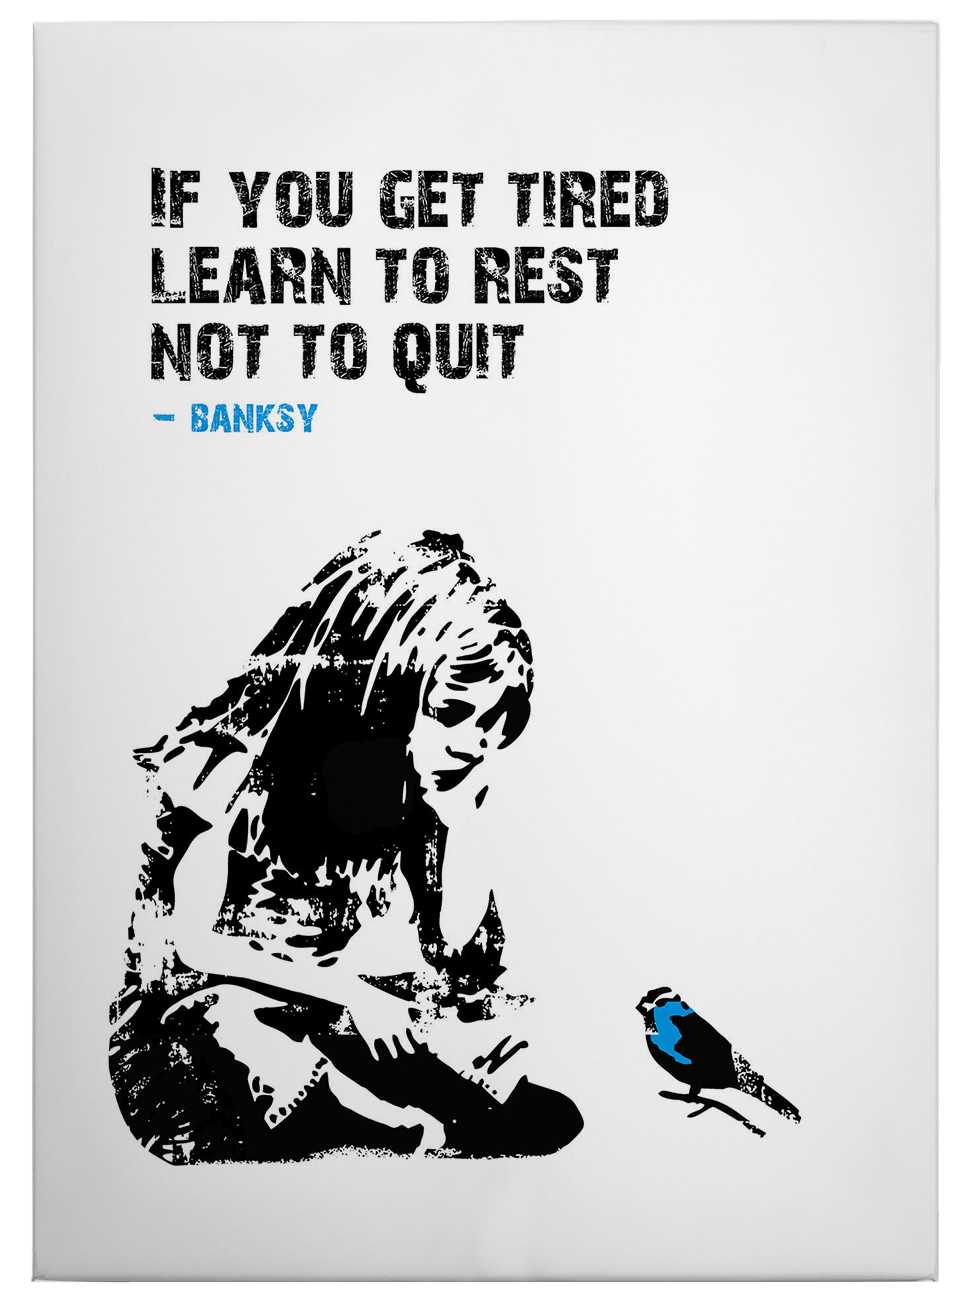             Leinwandbild "If you get tired" von Banksy – 0,50 m x 0,70 m
        